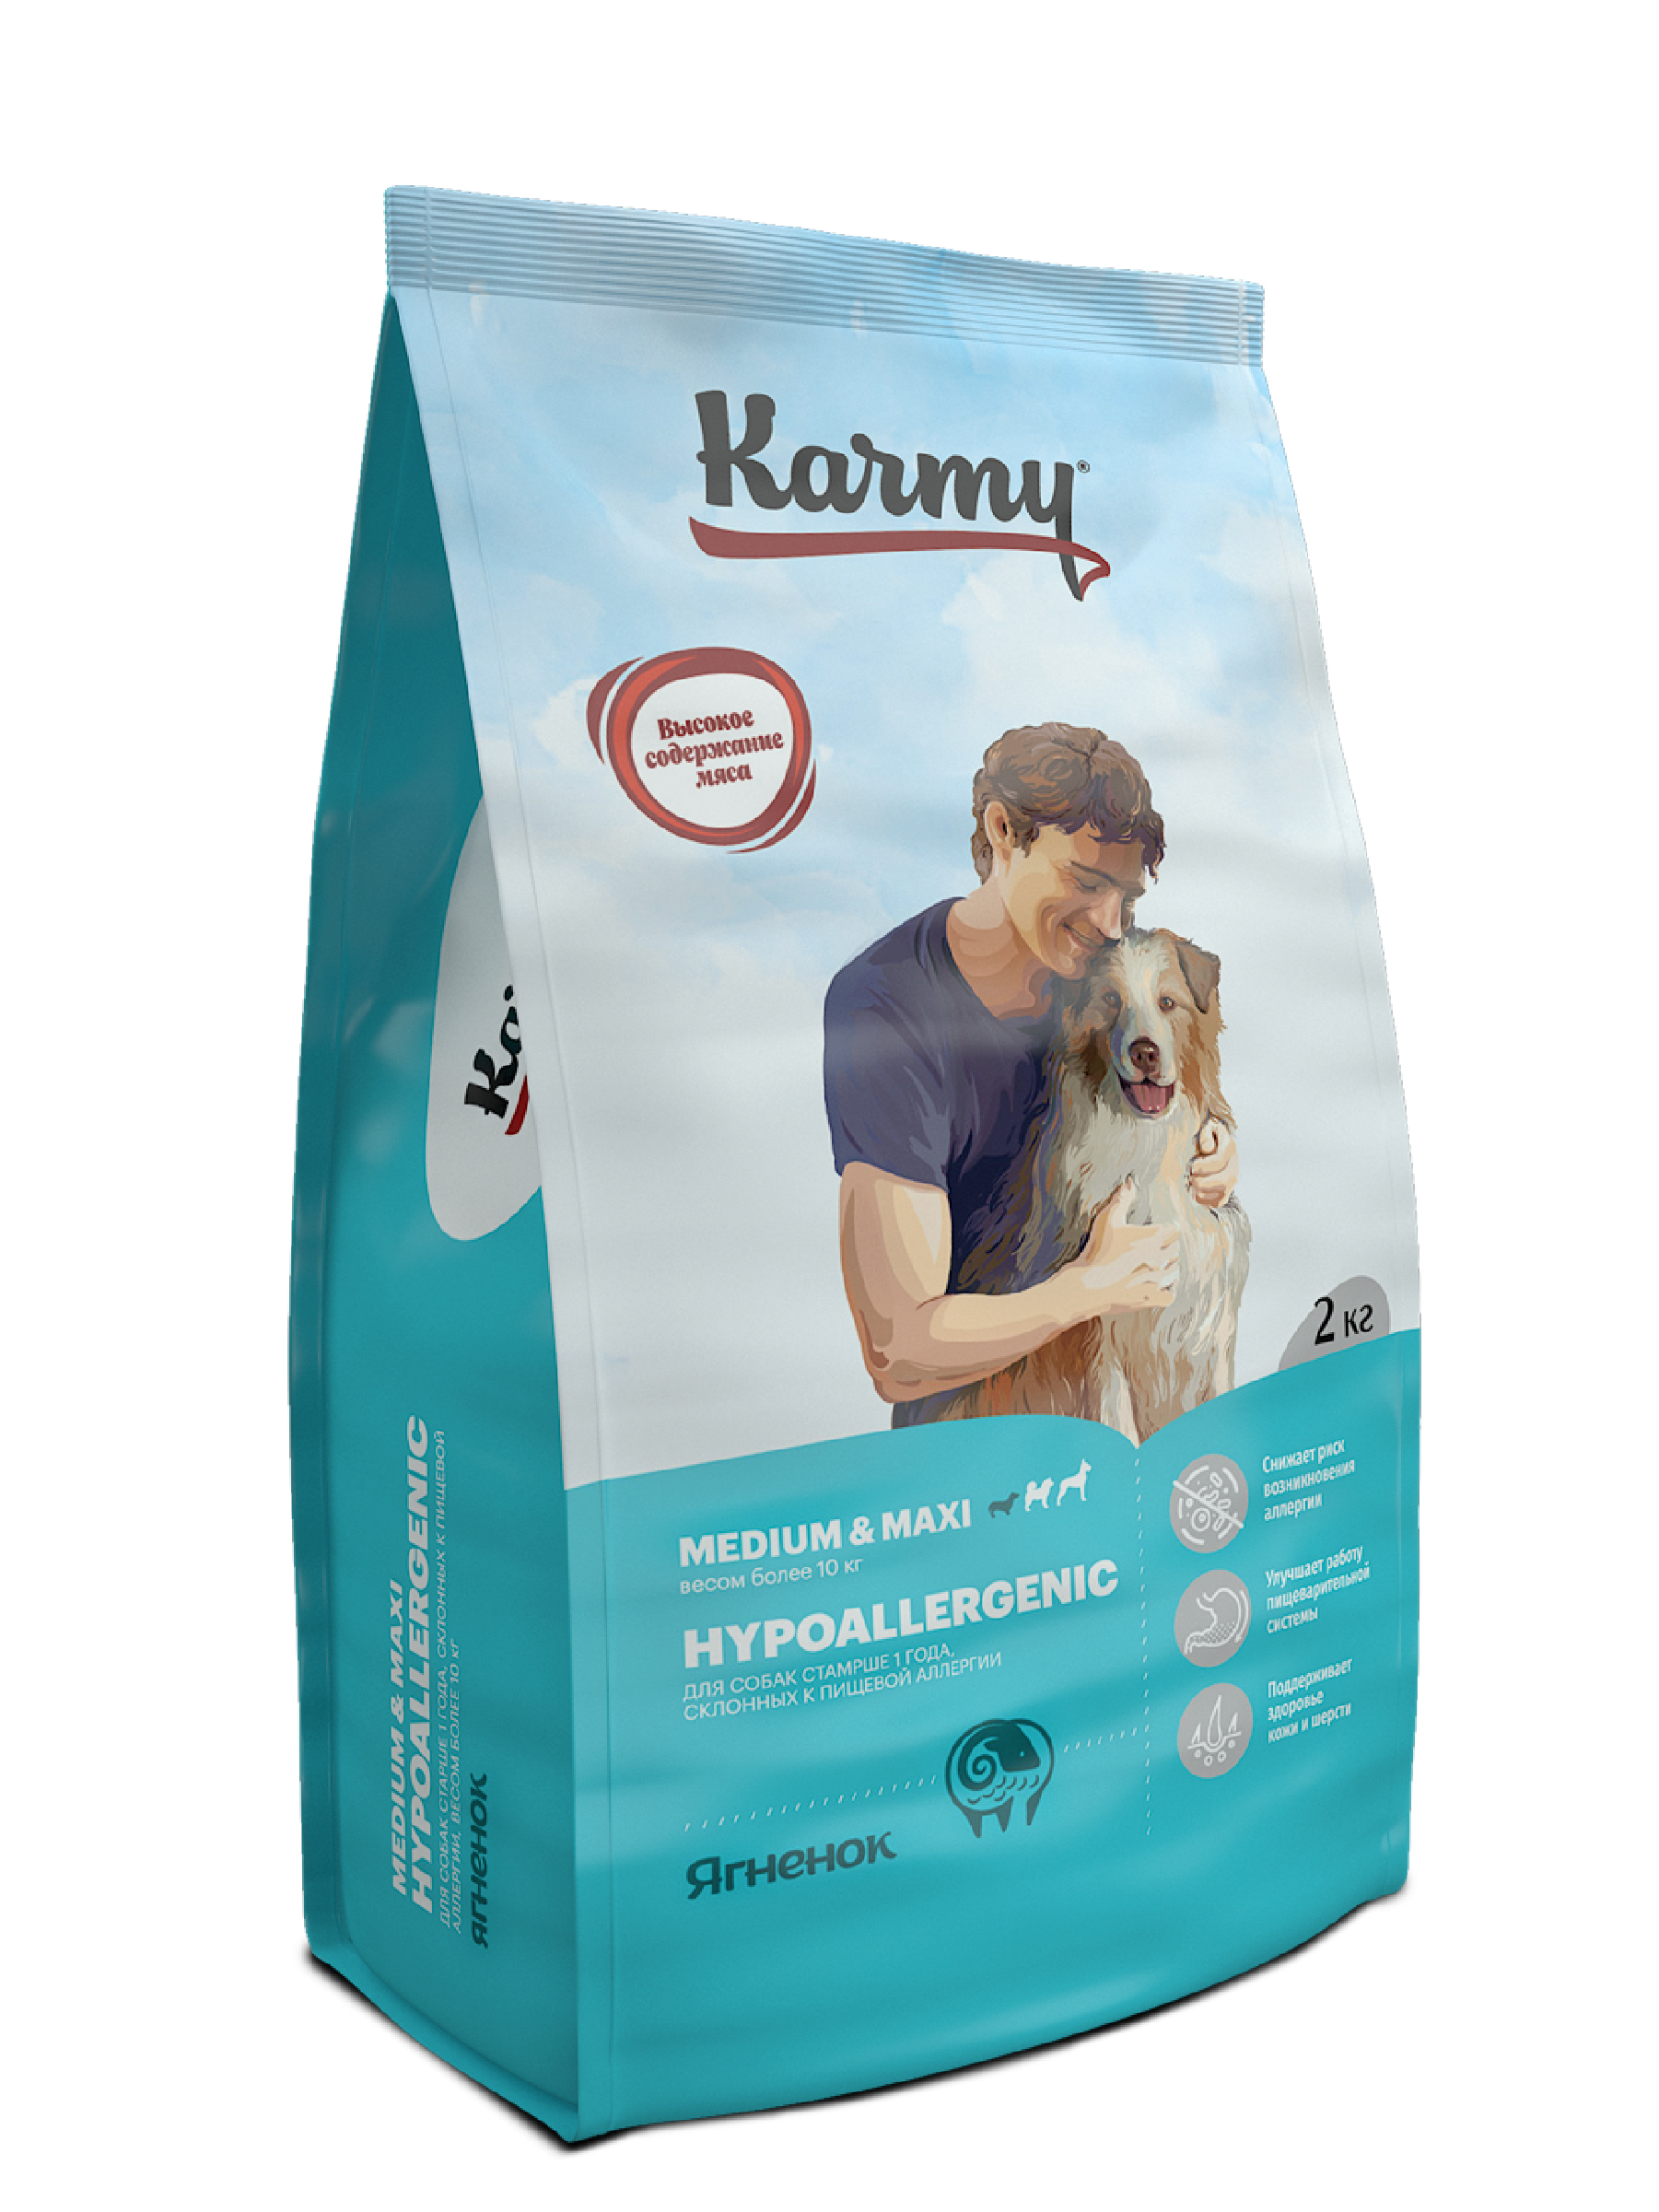 фото Сухой корм для собак karmy hypoallergenic medium & maxi, гипоаллергенный, ягненок, 2кг